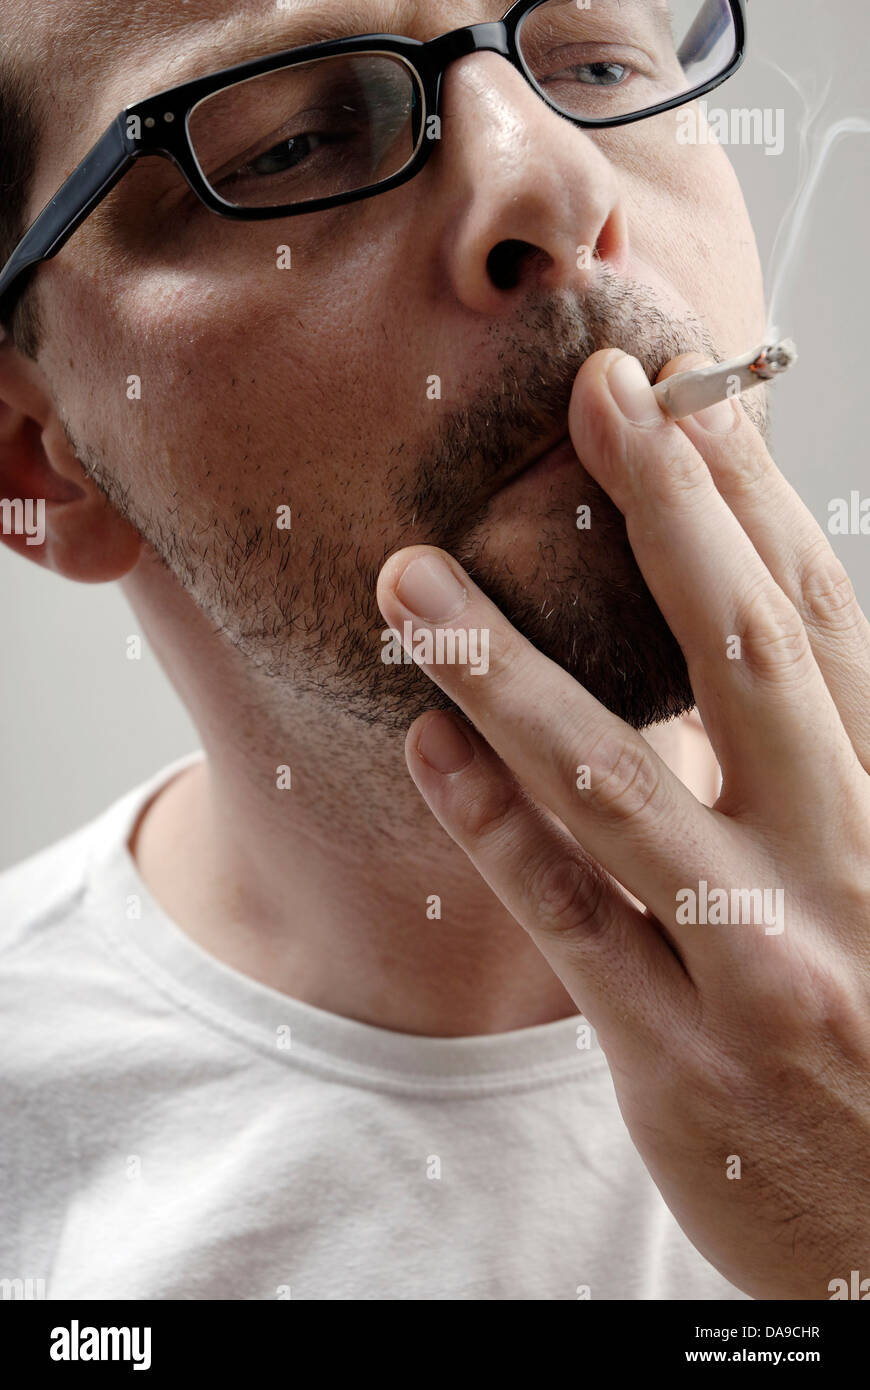 Man smoking a cigarette Stock Photo